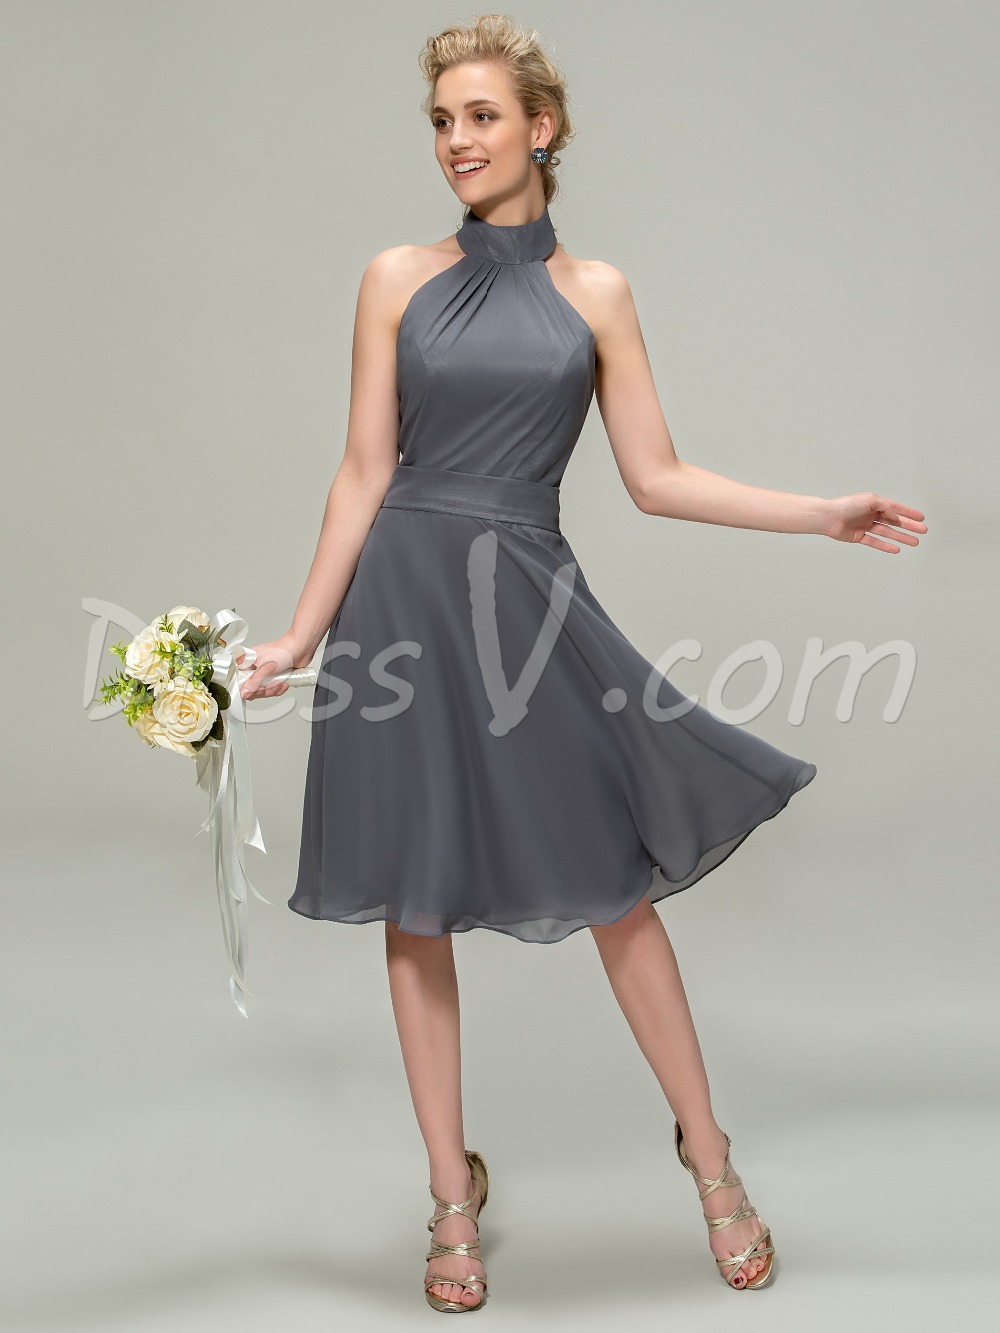 knee length halter dress_Other dresses_dressesss